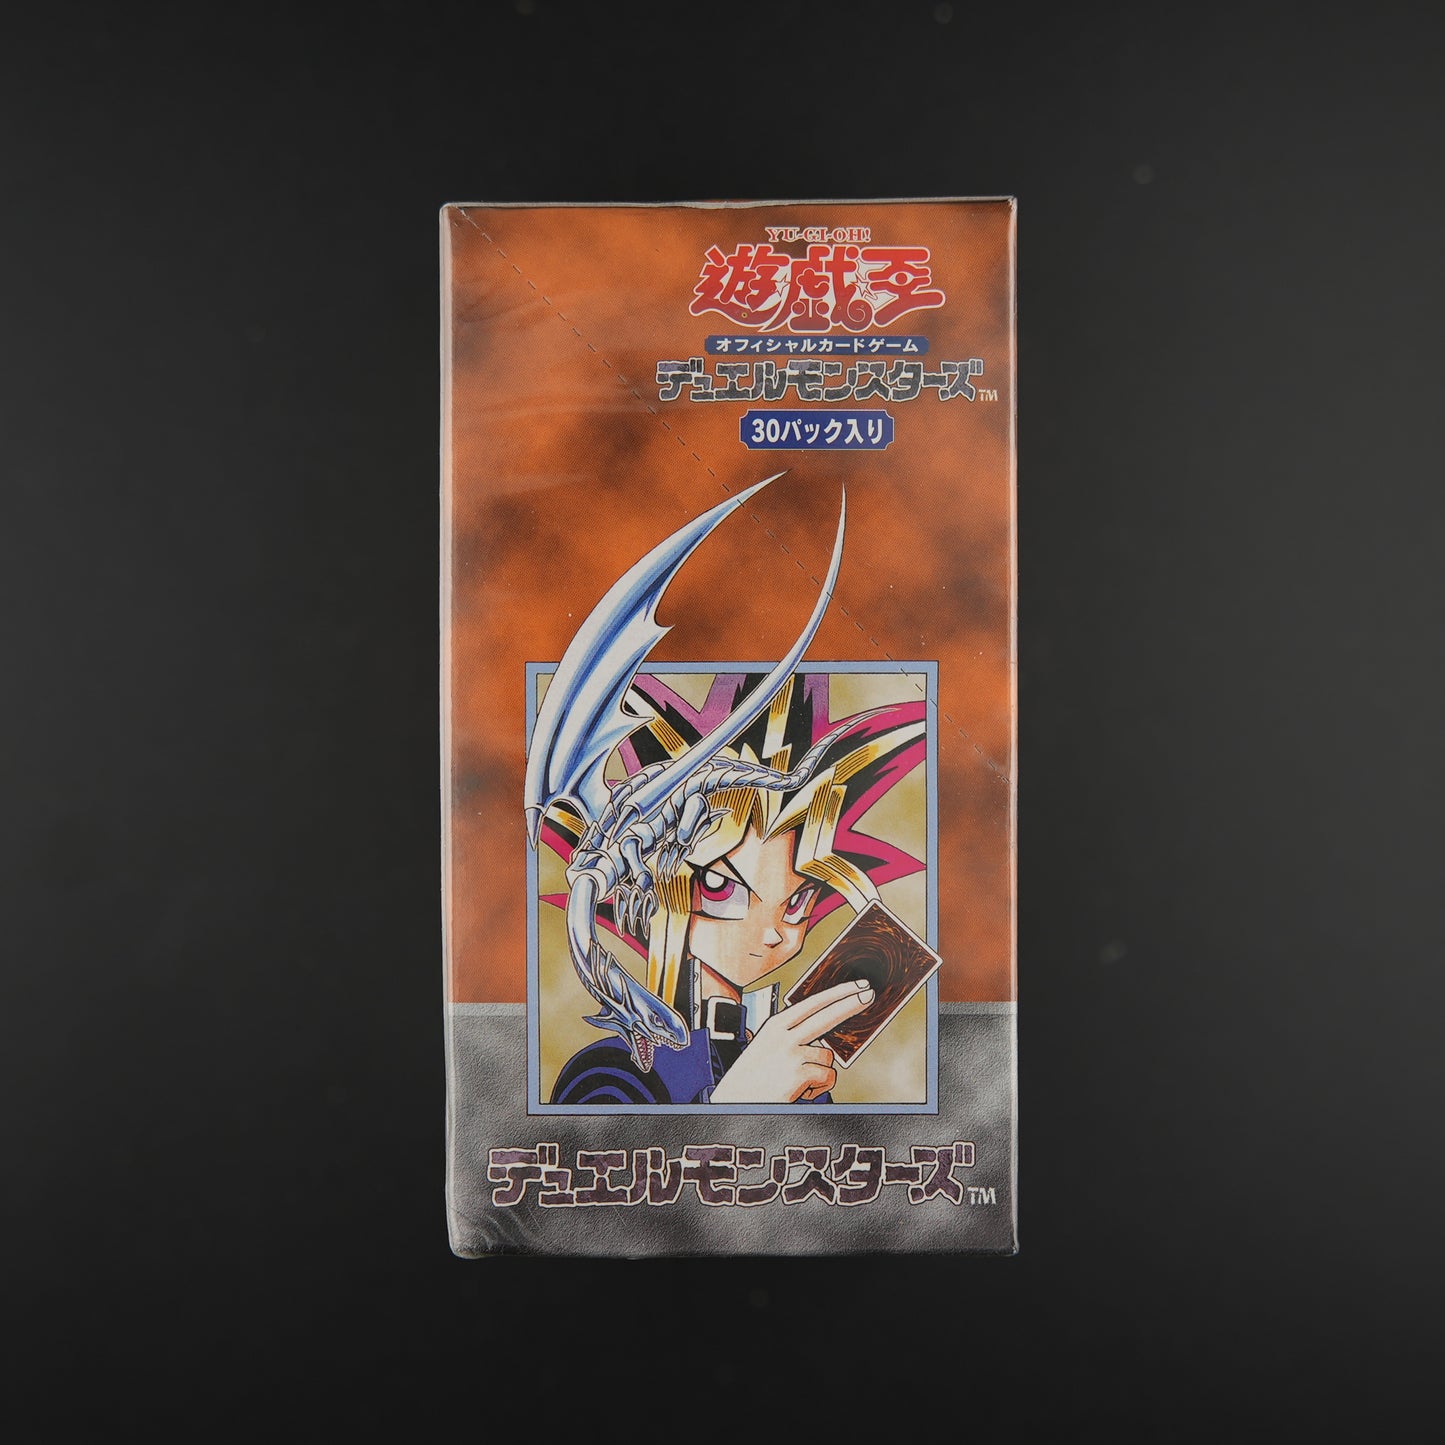 YuGiOh Volume 1 Booster Box Japanese